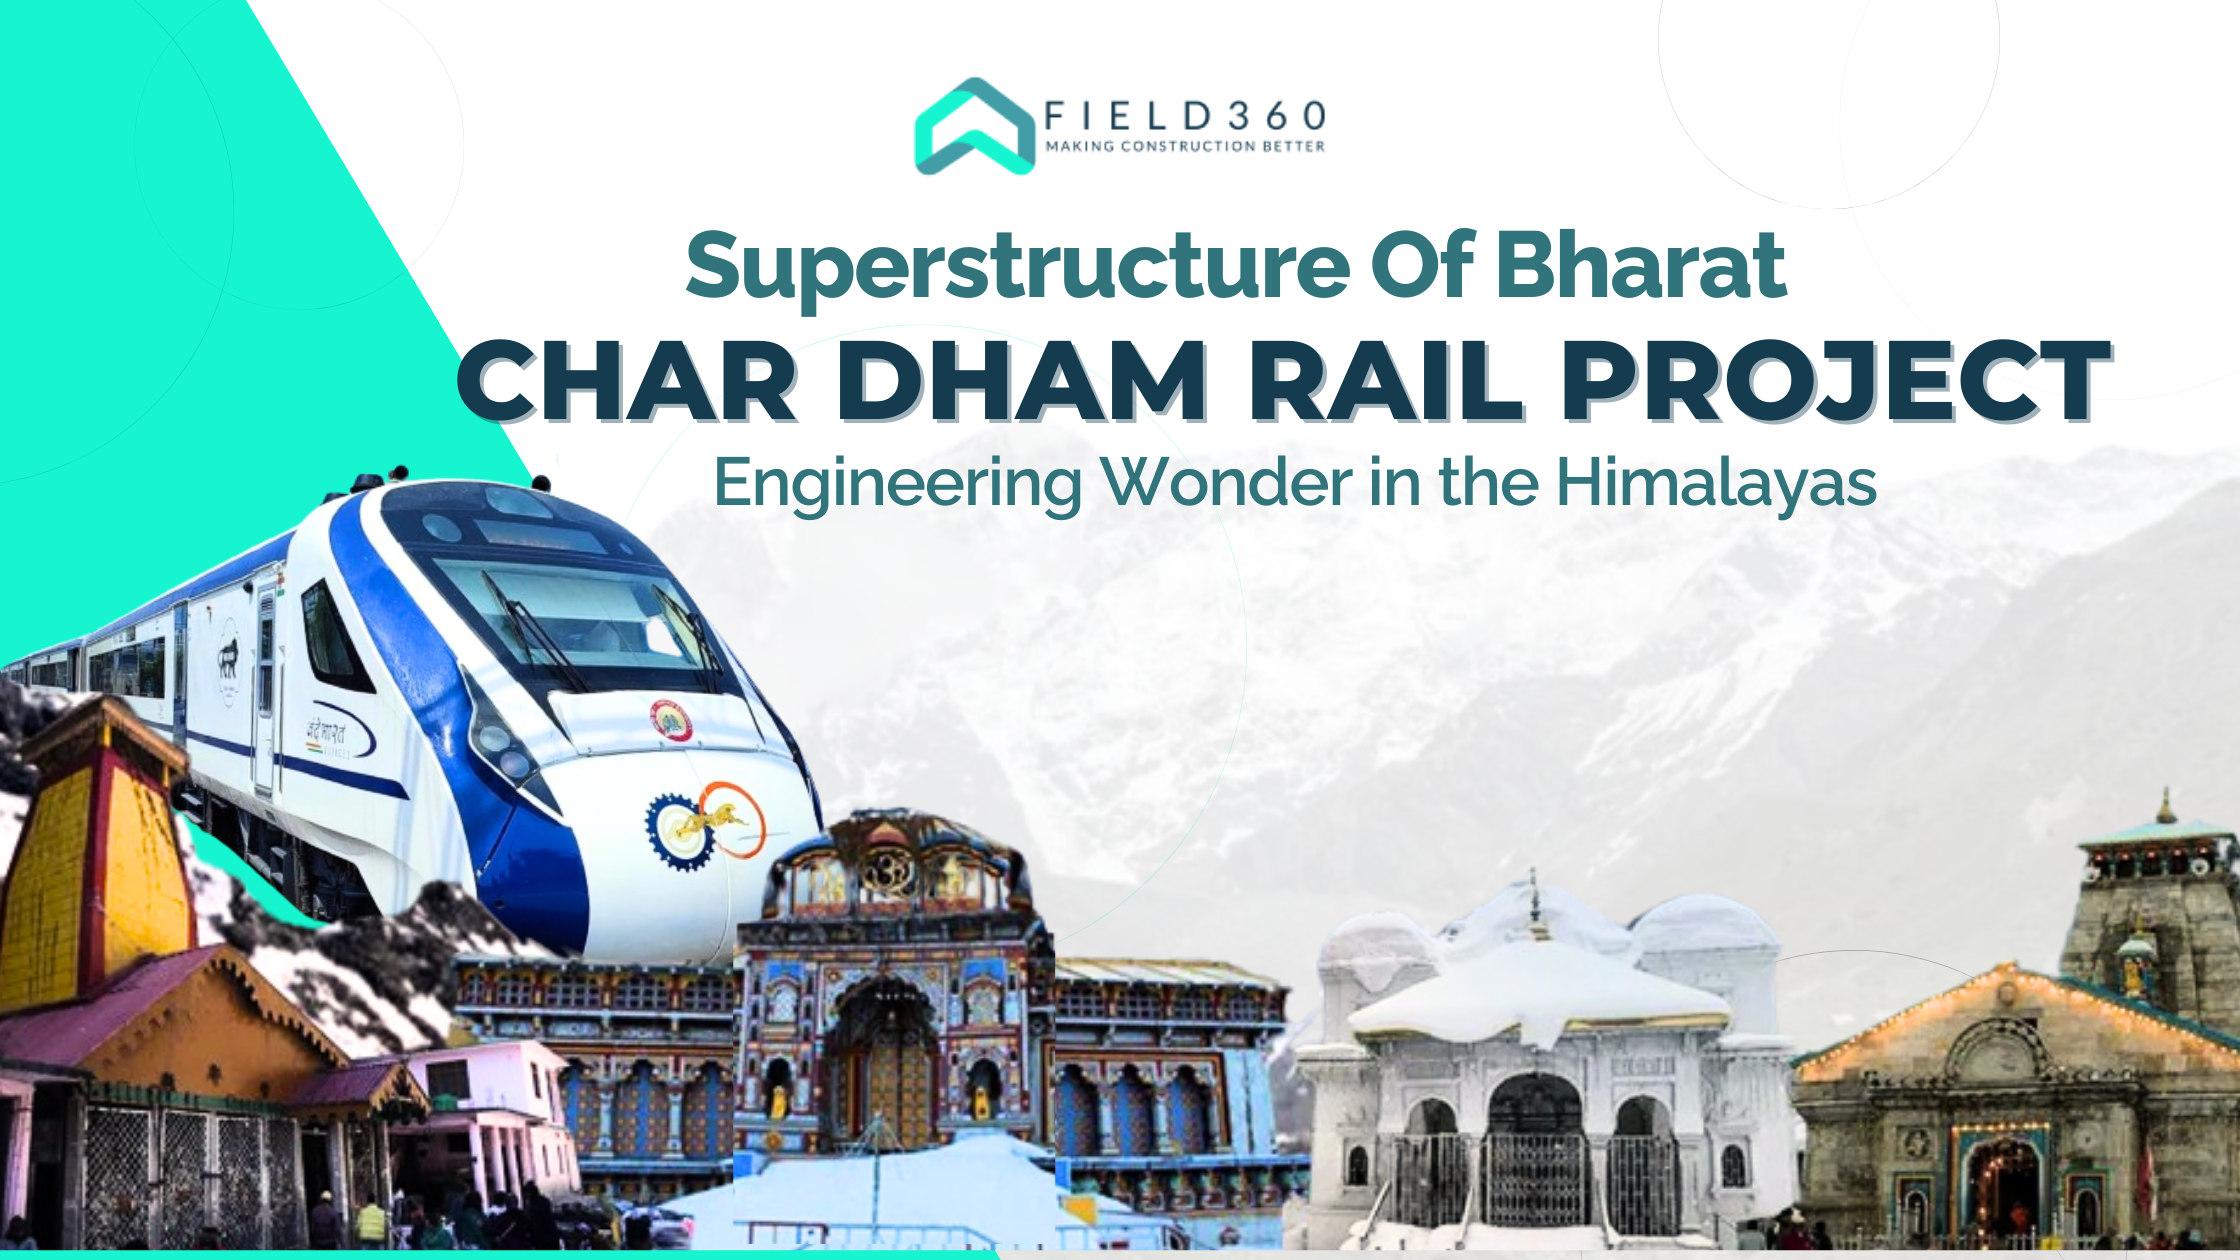 Char Dham Railway Project